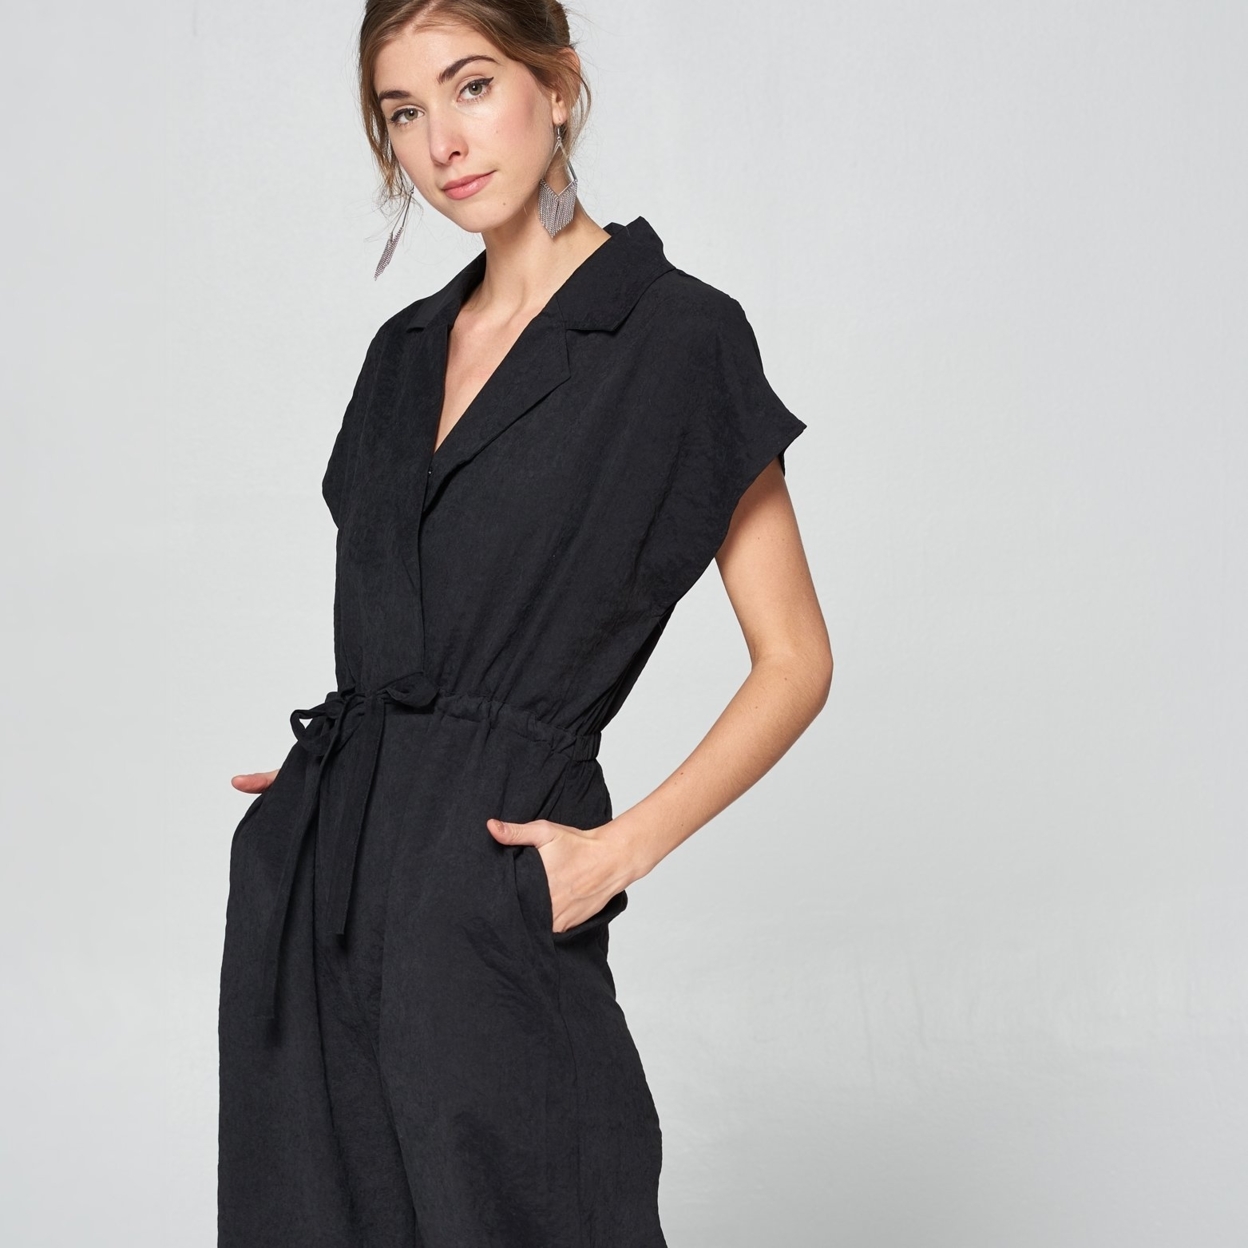 Kimono Cap Sleeve Jumpsuit - Black, Small (2-6)